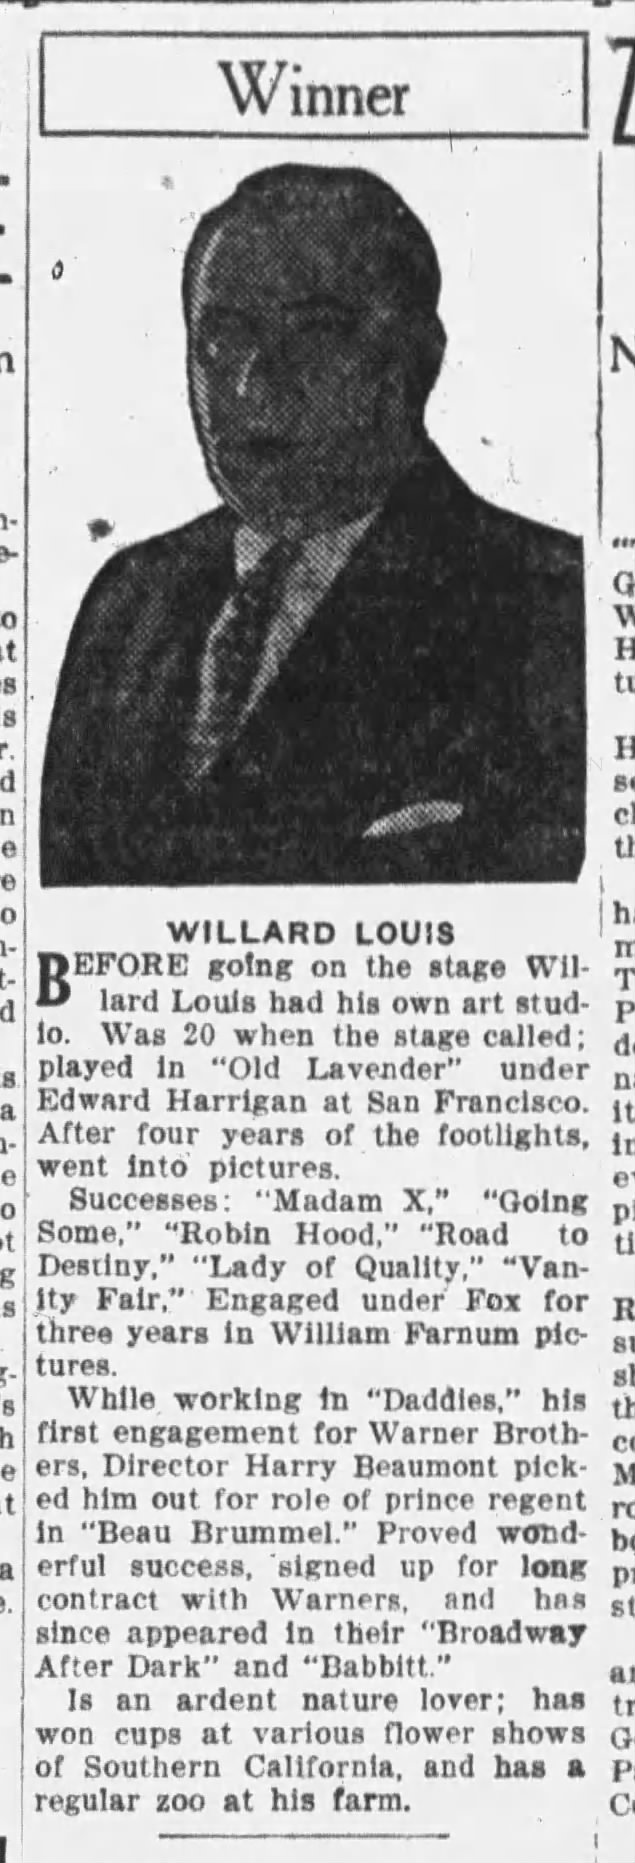 Willard Louis